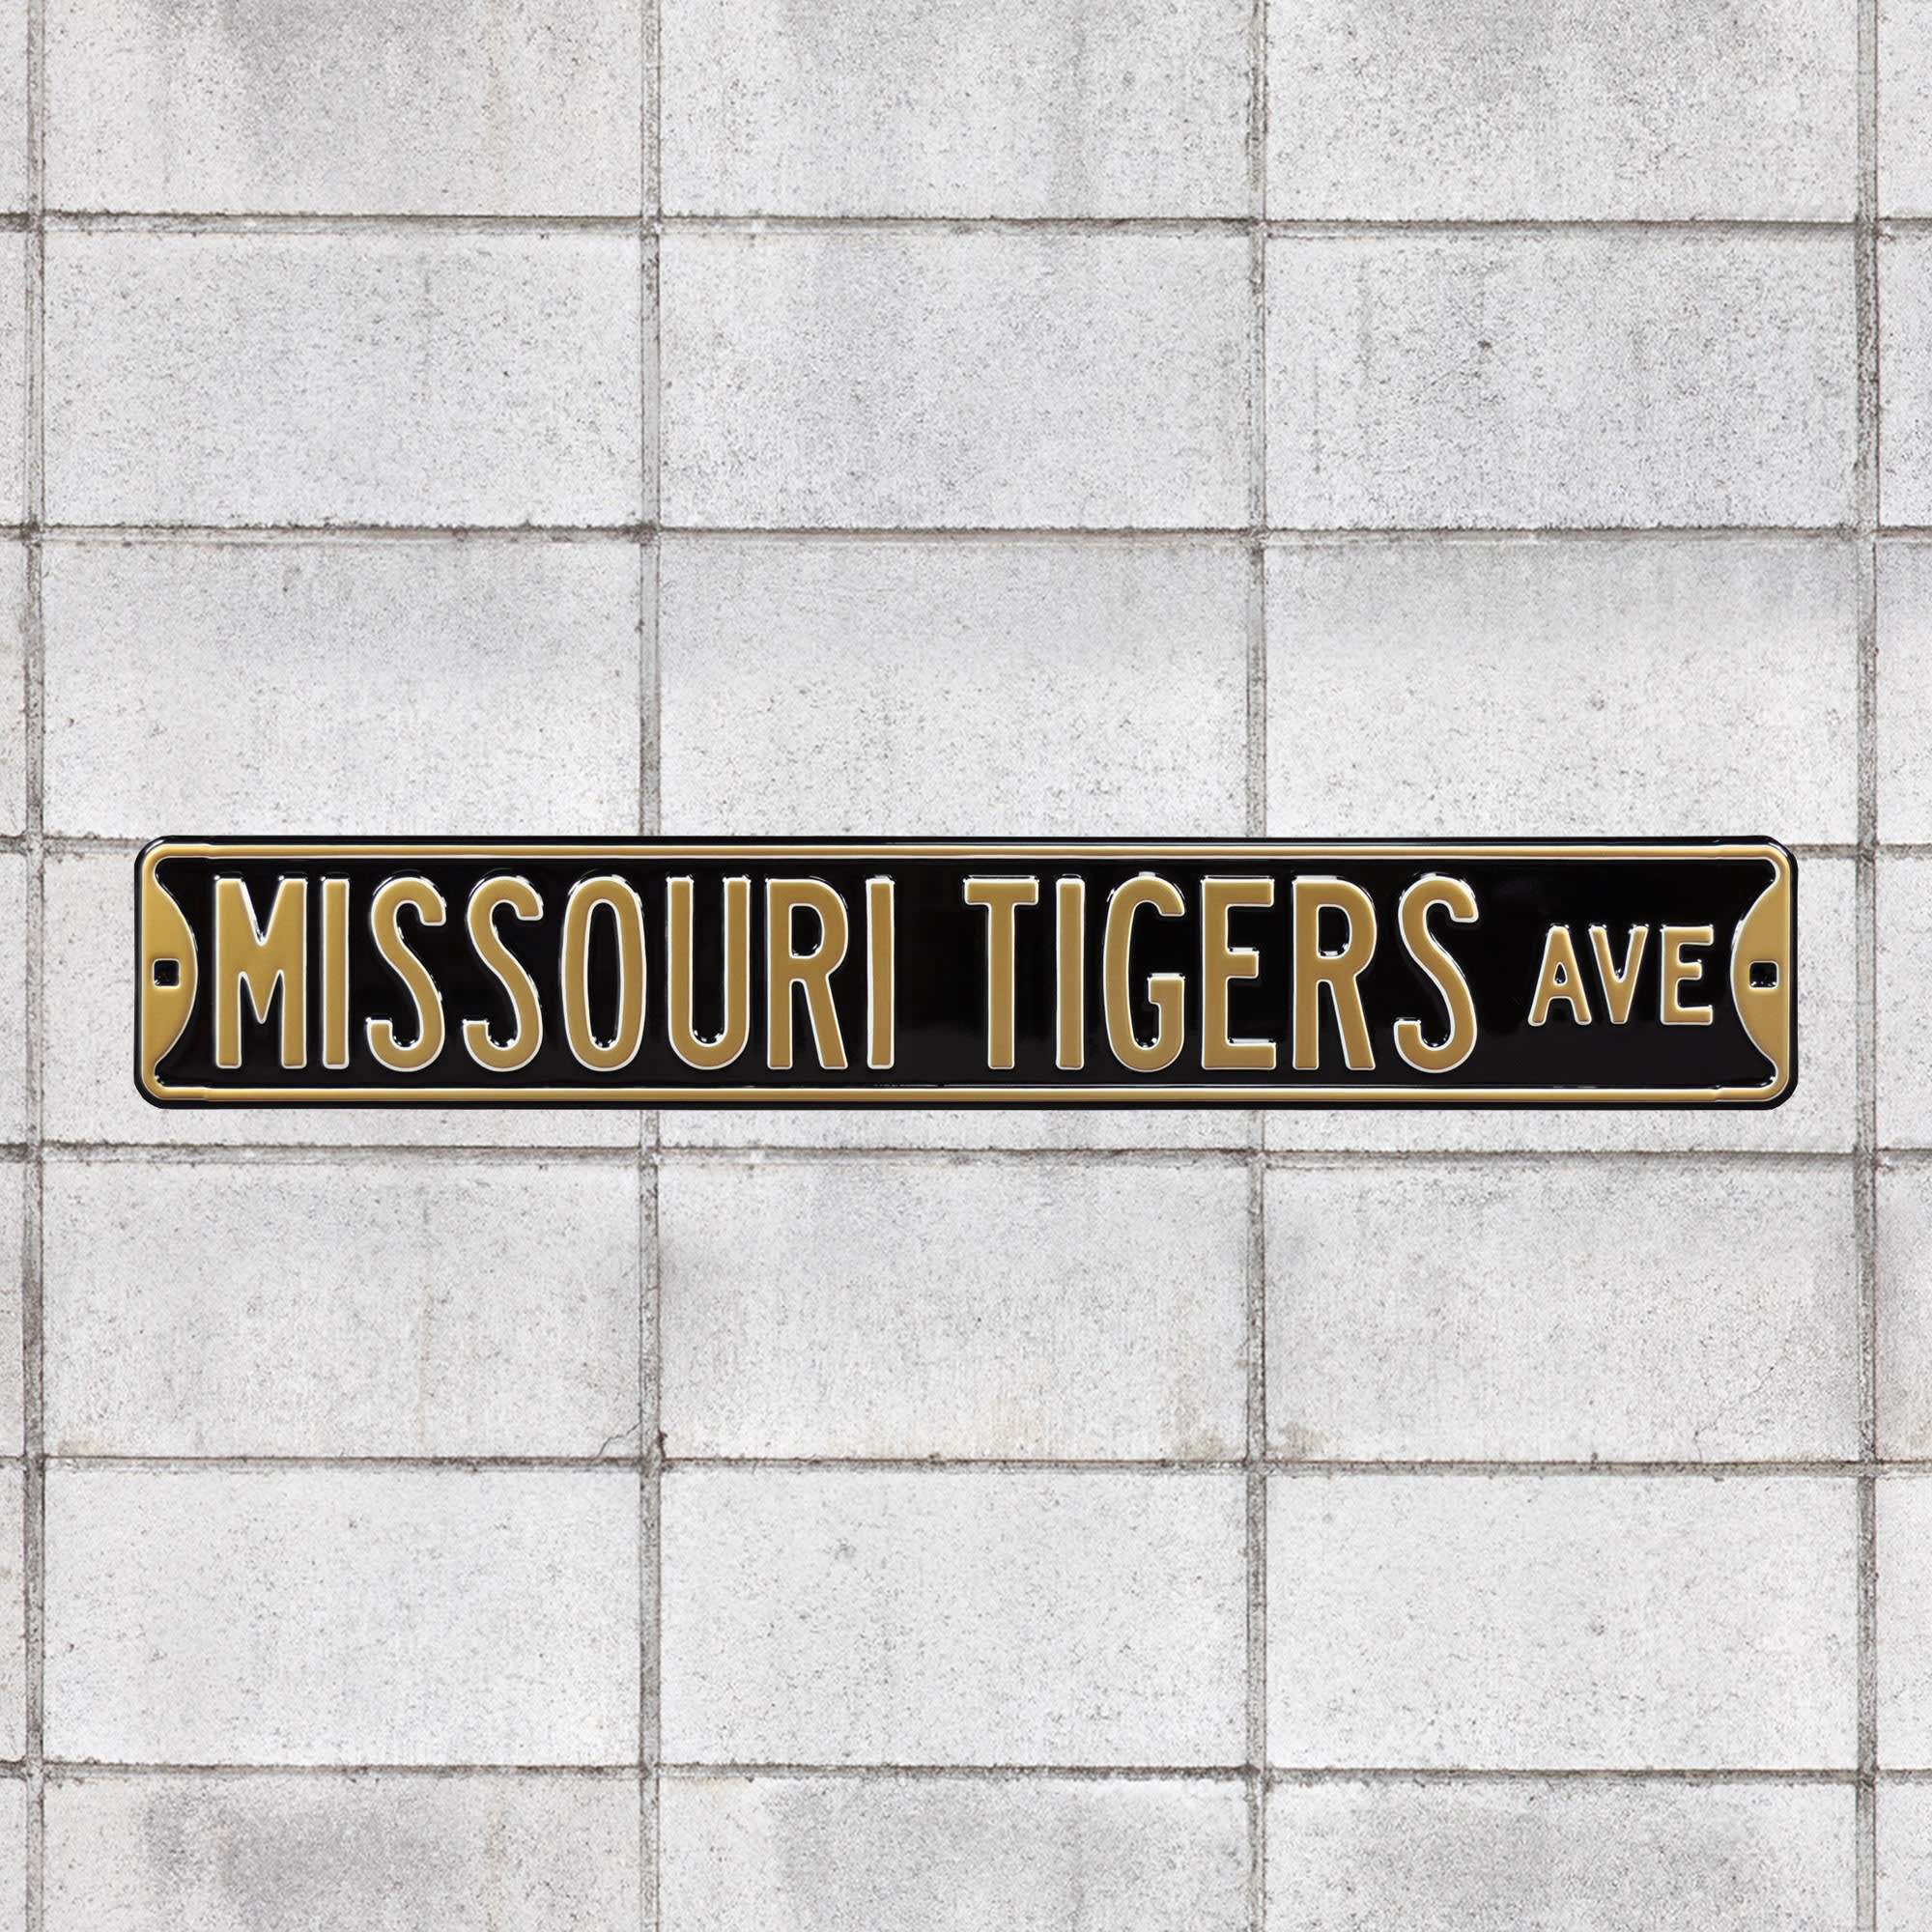 Missouri Tigers: Missouri Tigers Avenue - Officially Licensed Metal Street Sign 36.0"W x 6.0"H by Fathead | 100% Steel